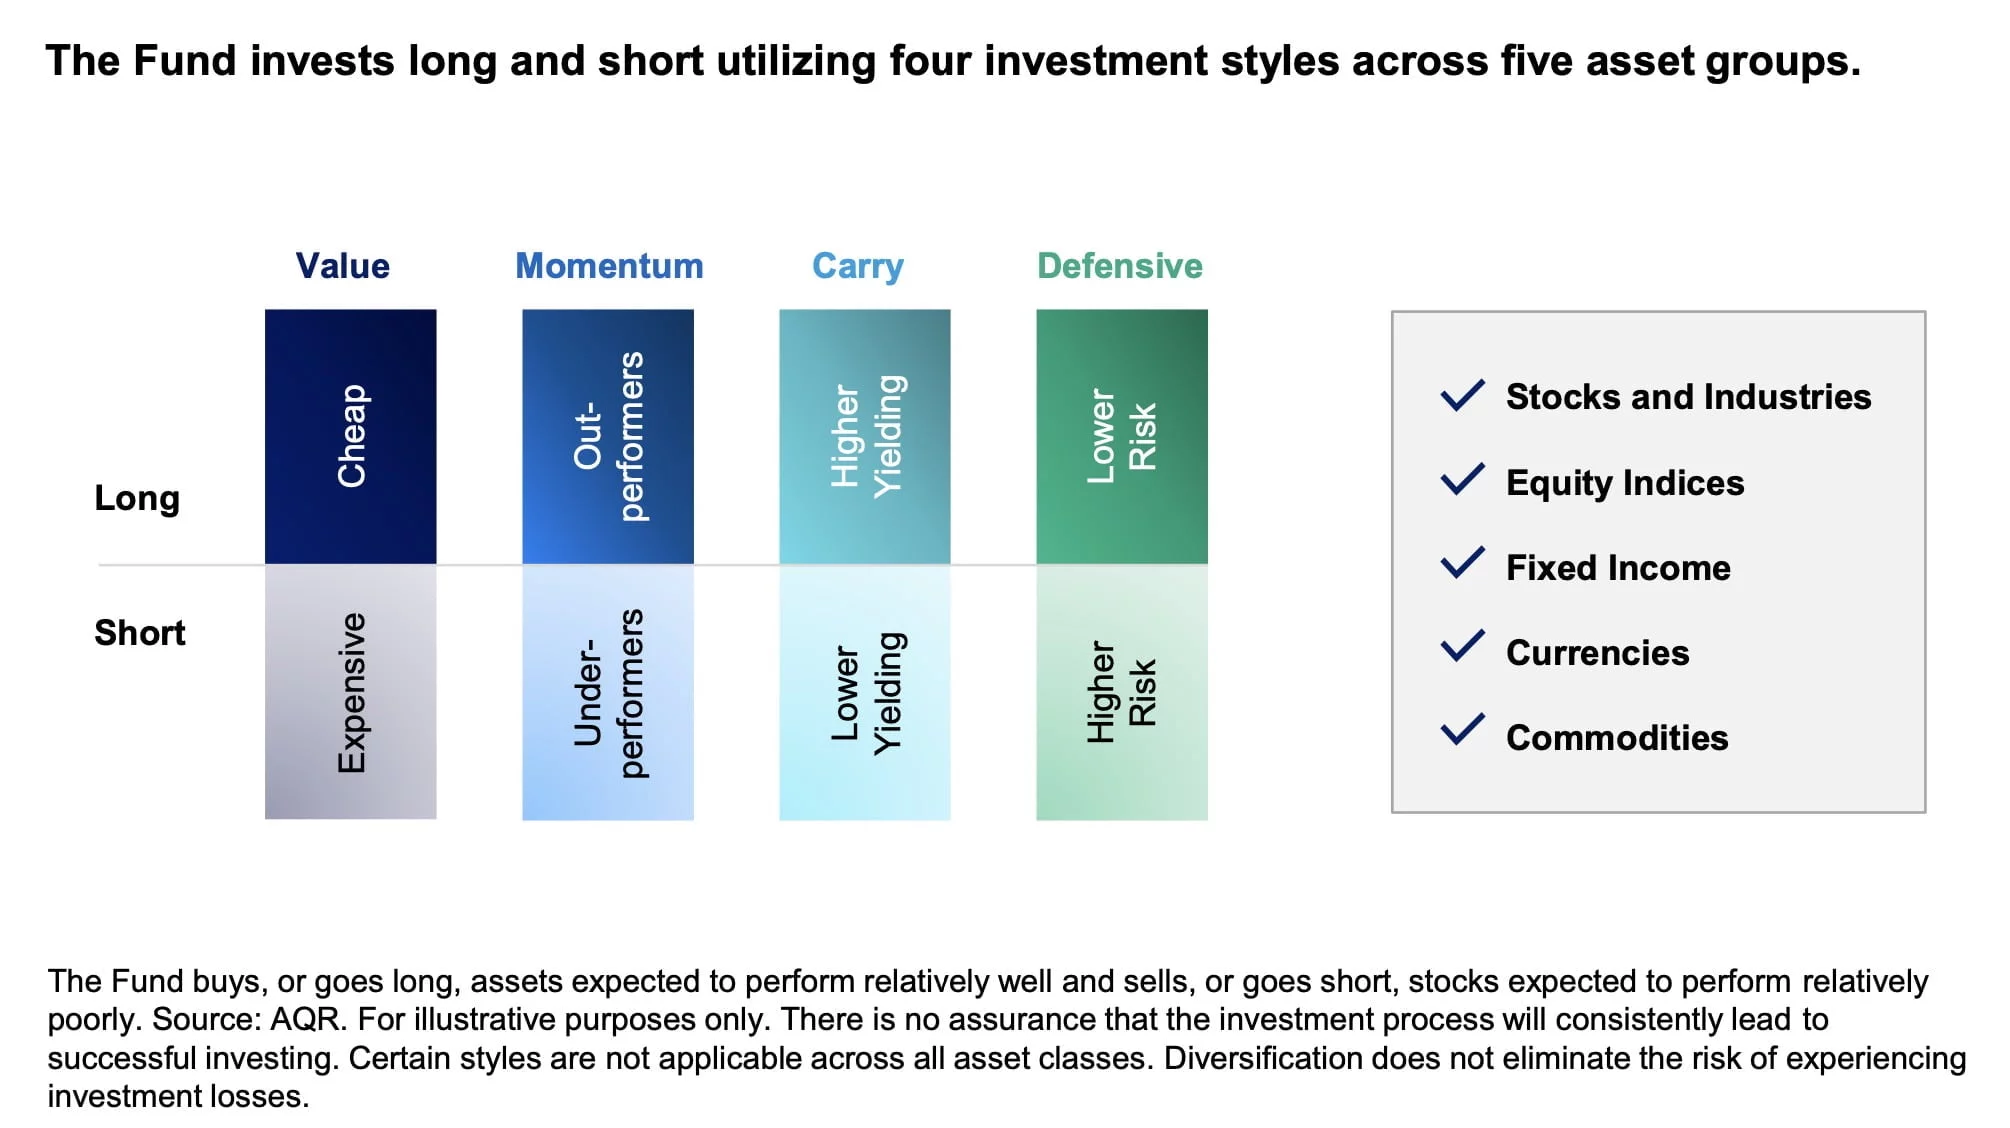 ACAI Outdoorwear Company Profile: Valuation, Funding & Investors